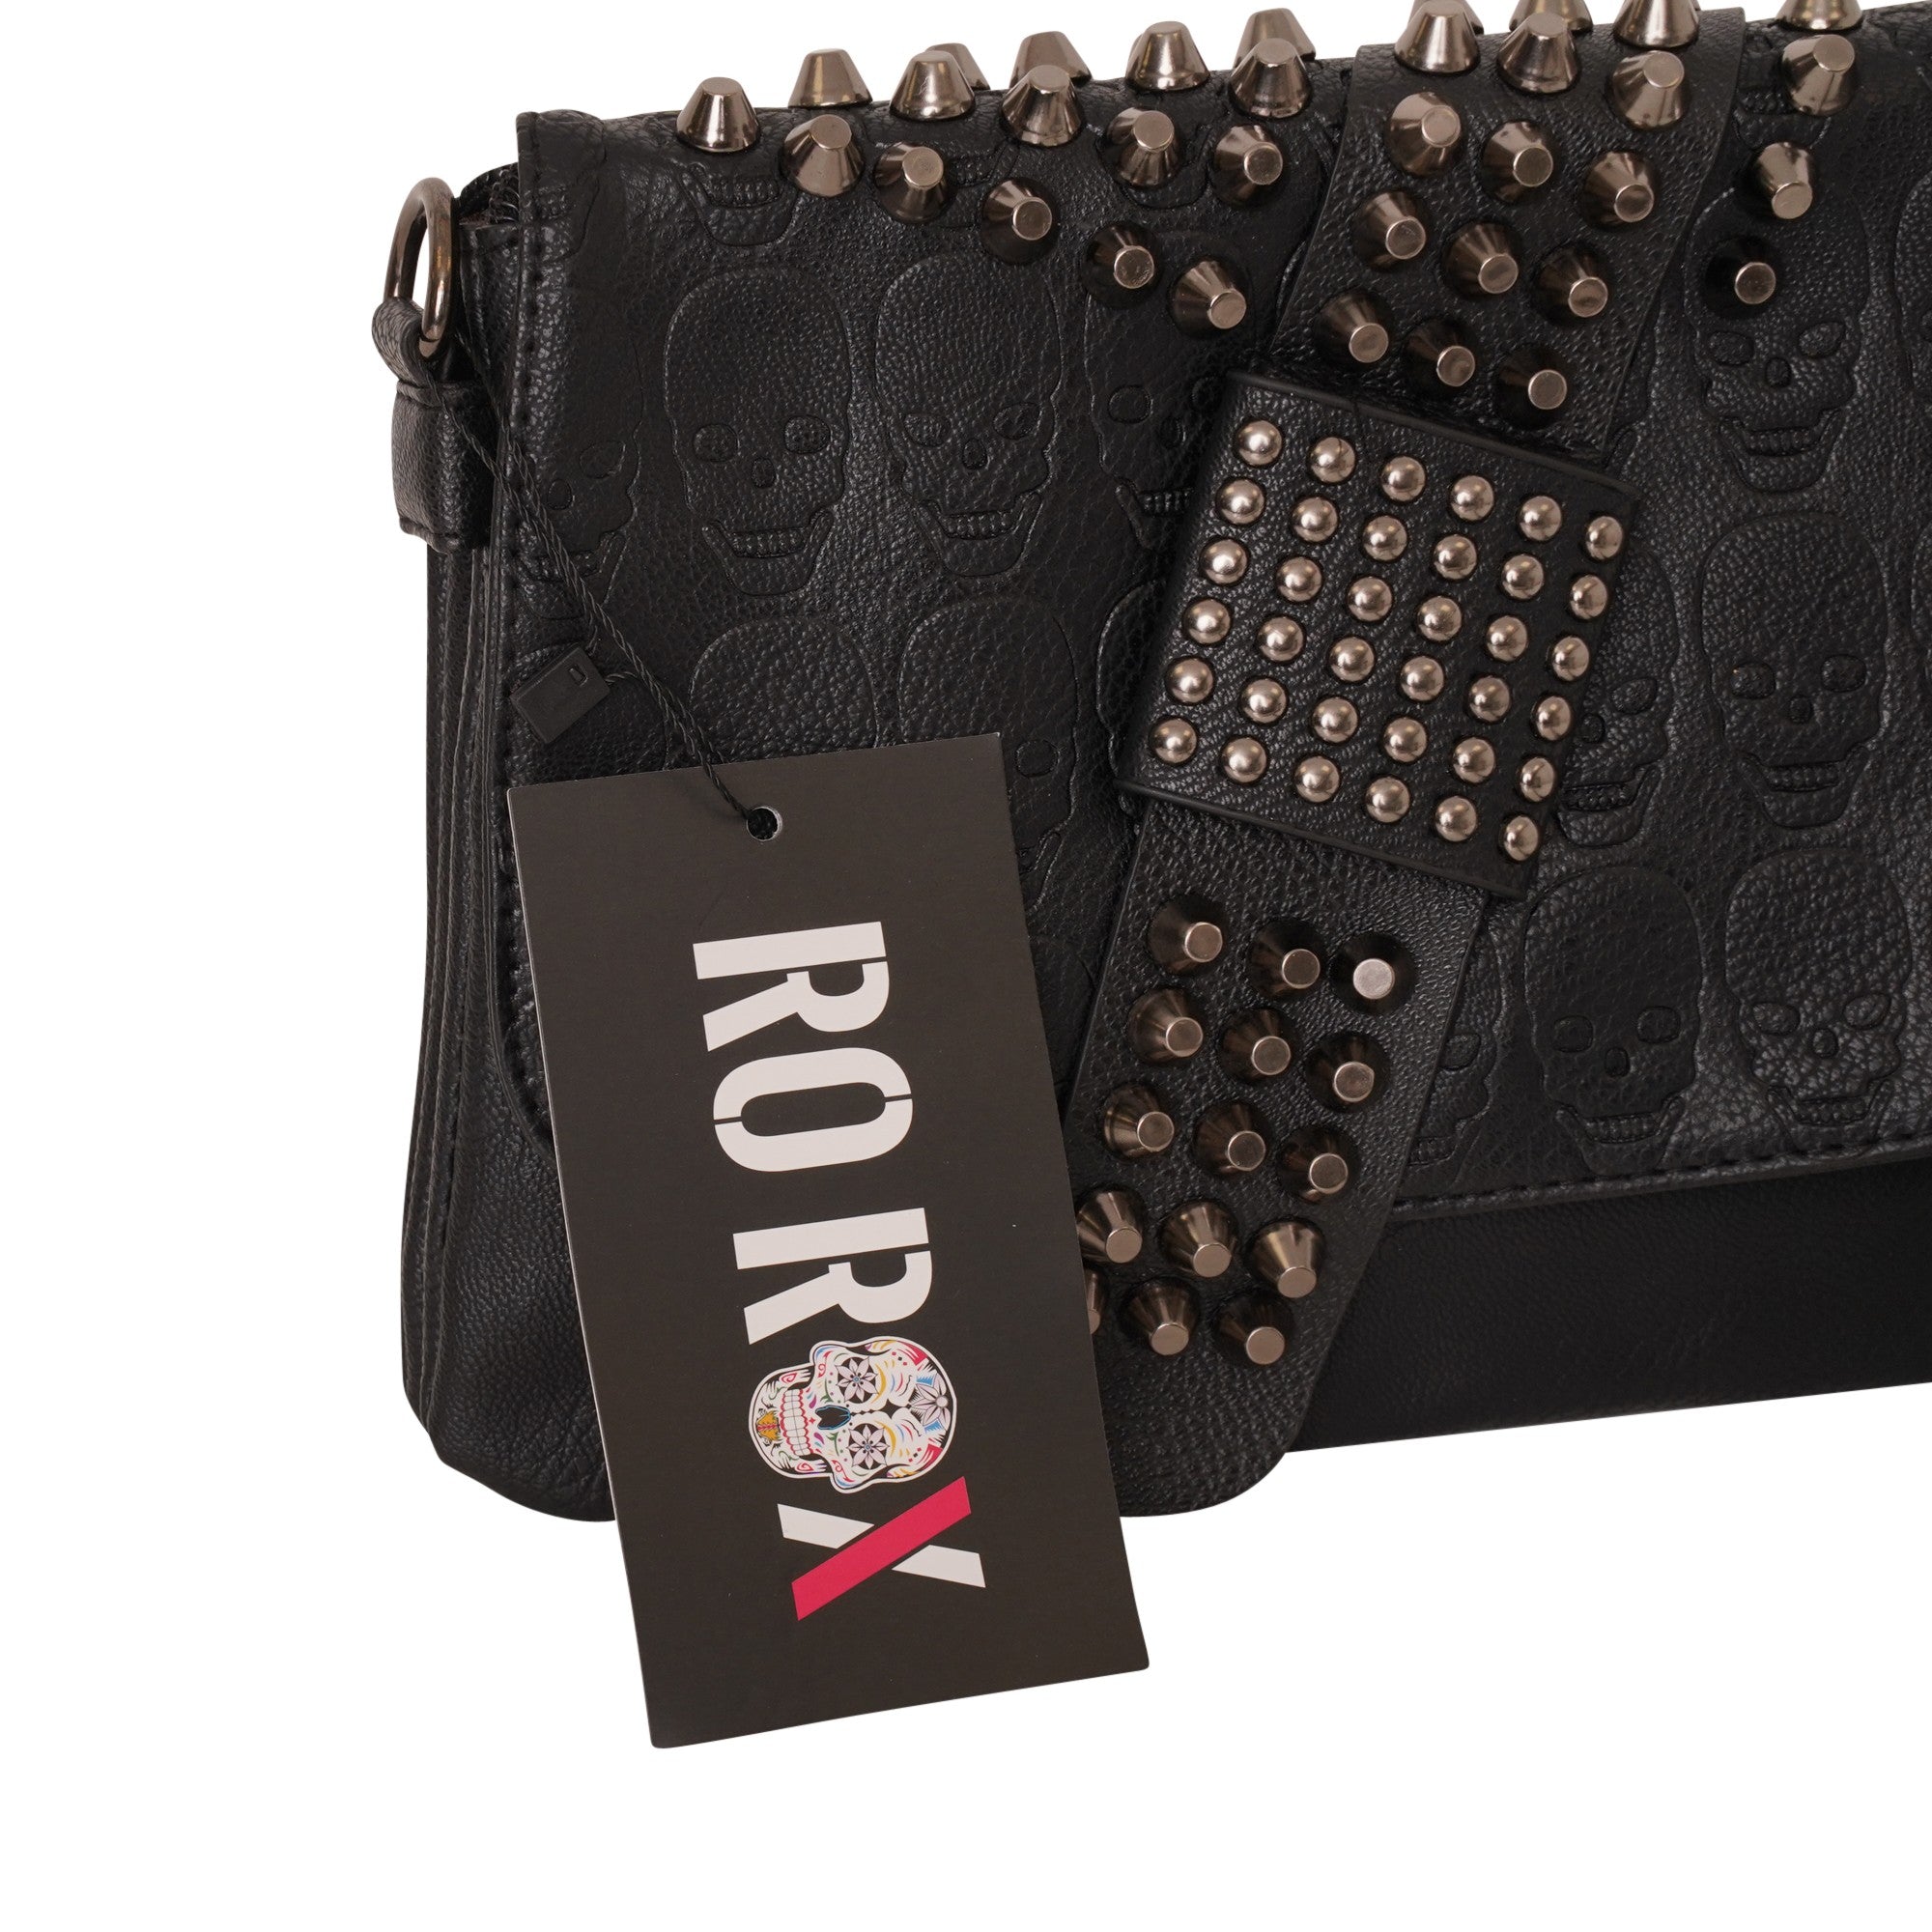 Ro Rox Ophelia Studded Faux Leather Crossbody Bag, Black, Skull